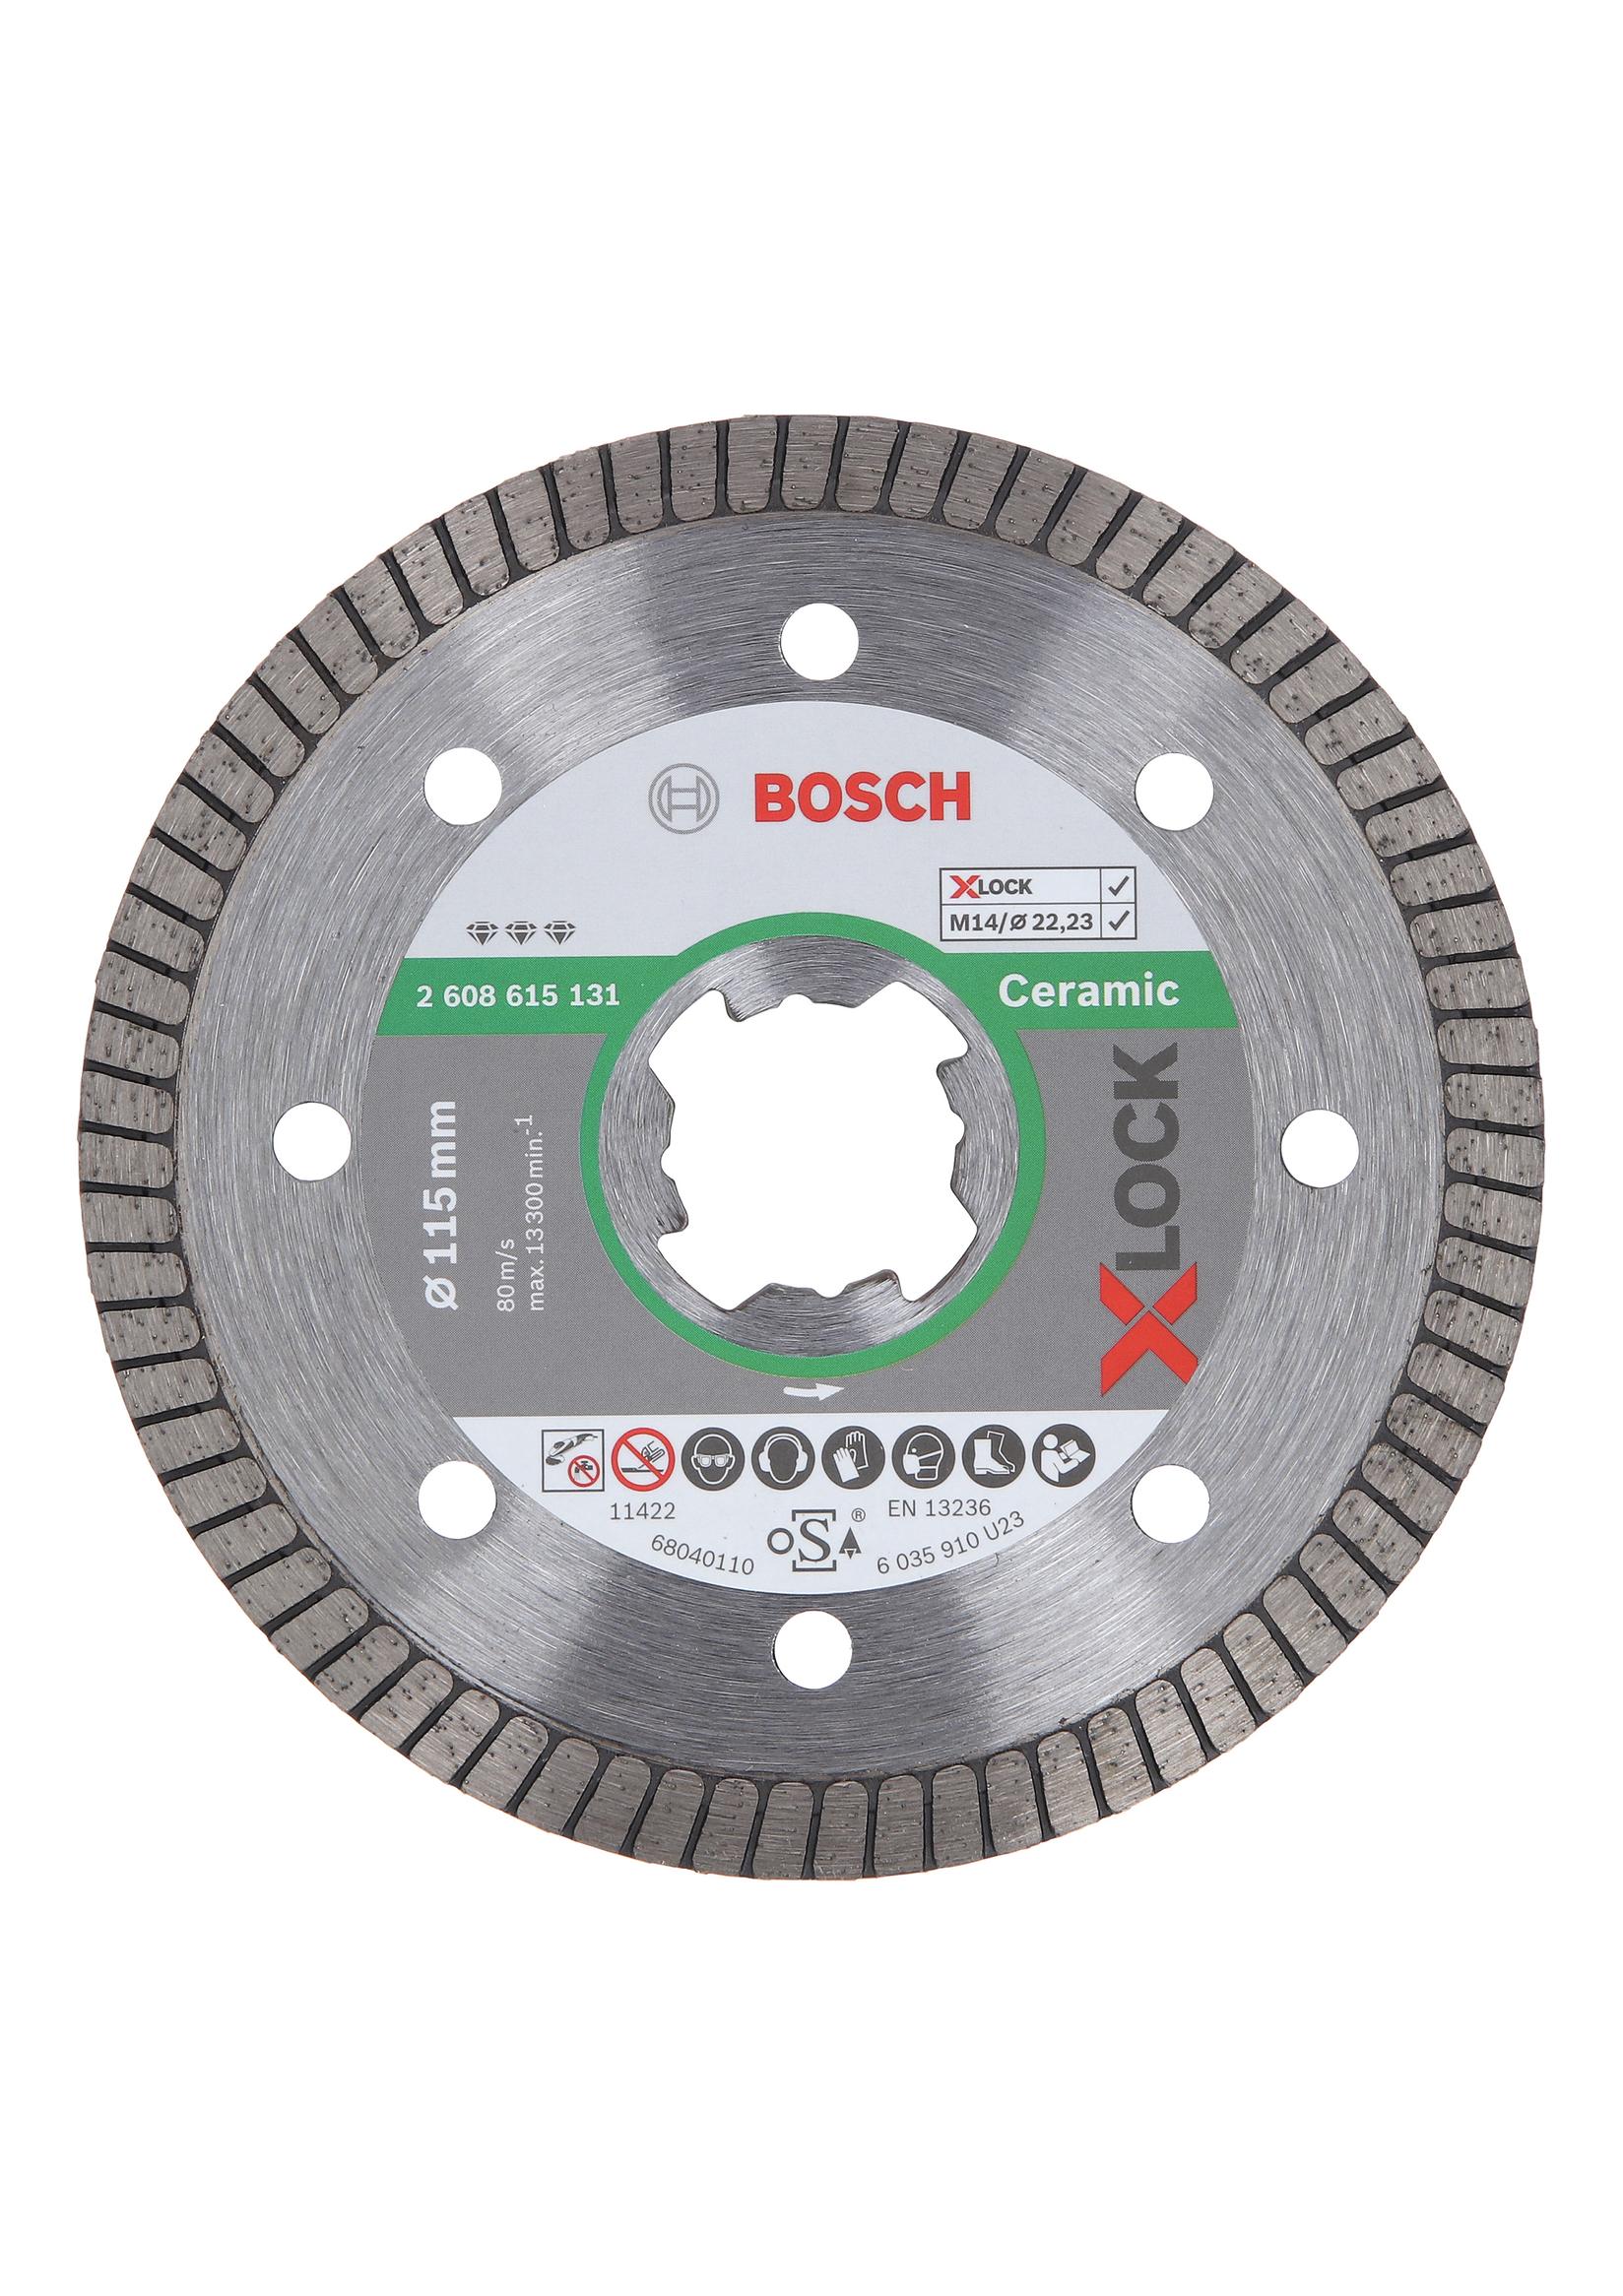 Selected image for Bosch X-LOCK Best for Ceramic Extraclean Turbo dijamantska rezna ploča 115x22,23x1,4x7 2608615131, 115 x 22,23 x 1,4 x 7 mm